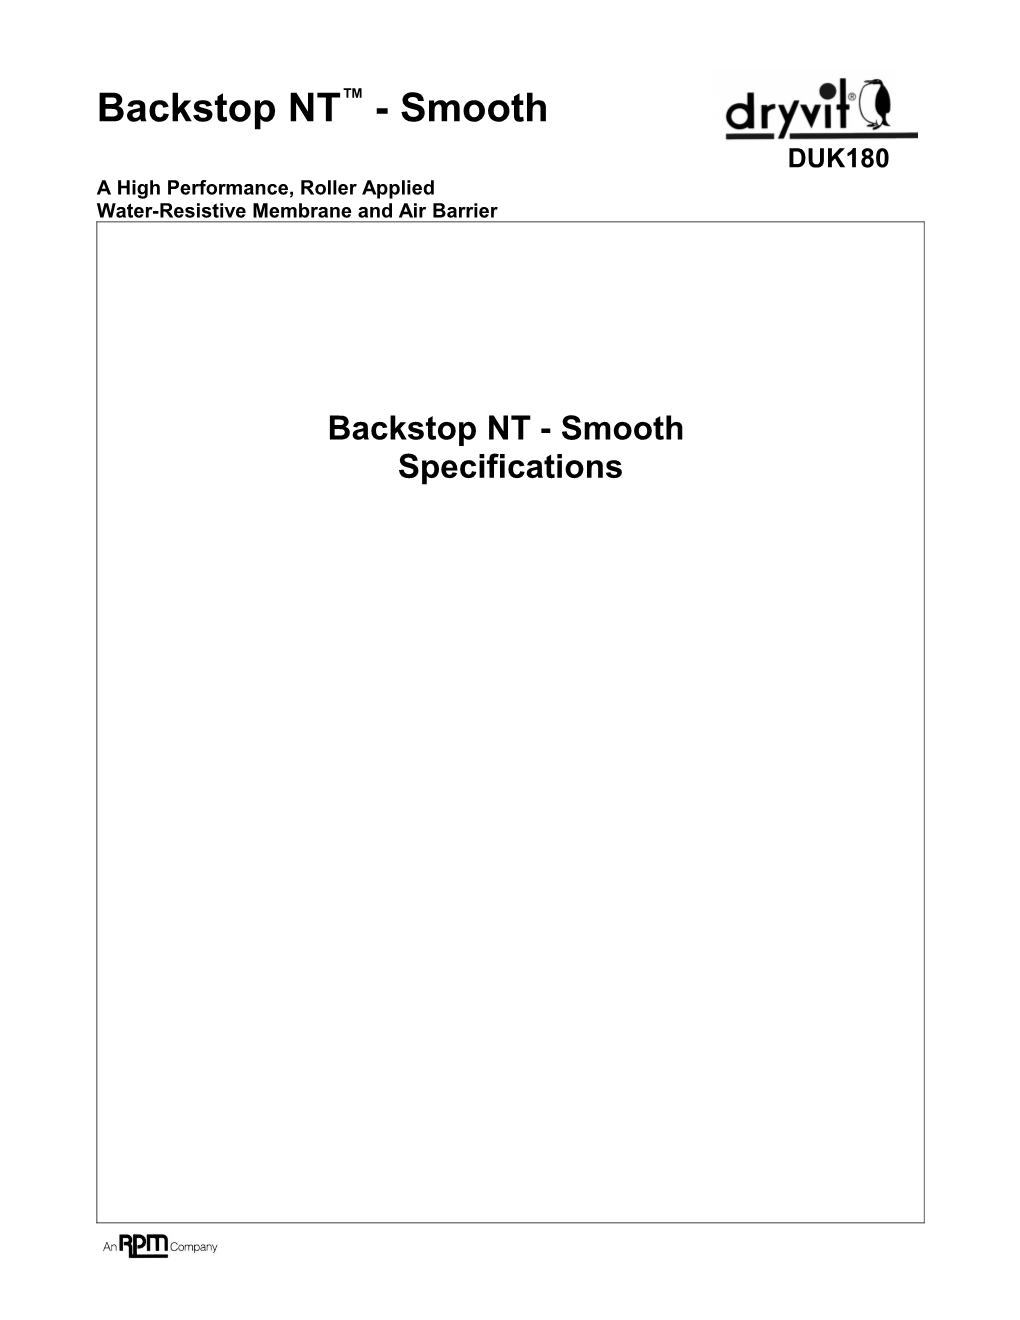 Dryvit UK Ltd - Backstop NT - Smooth Specifications DUK180